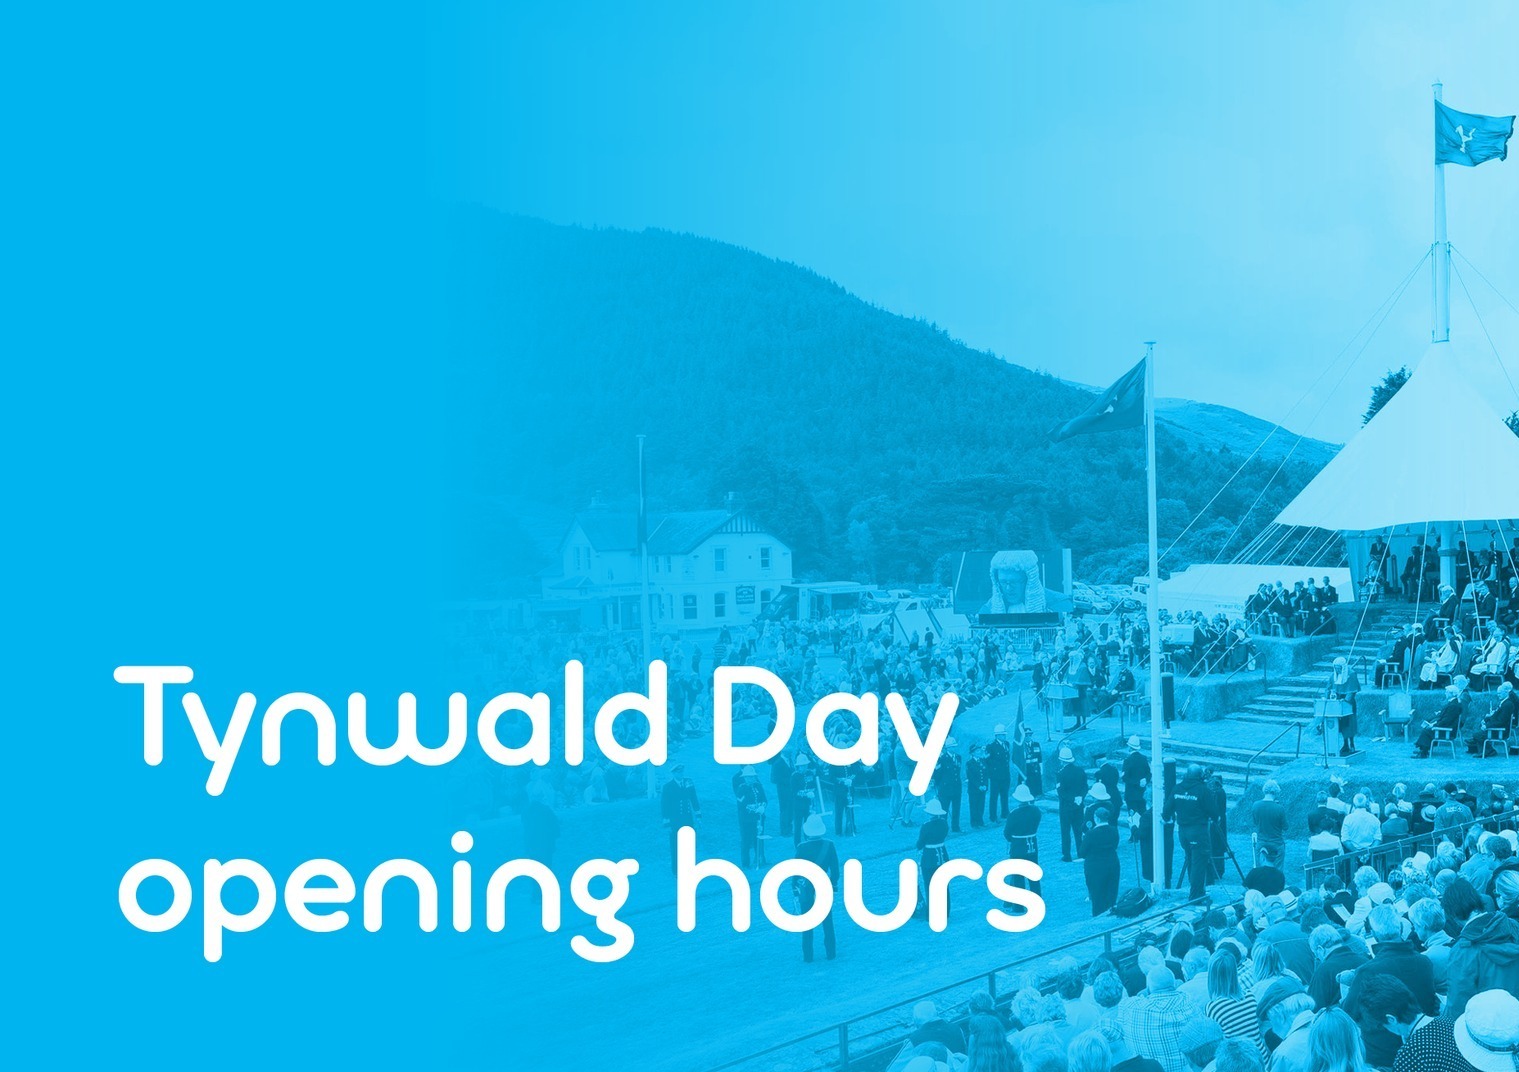 Tynwald Day Hours at Manx Telecom